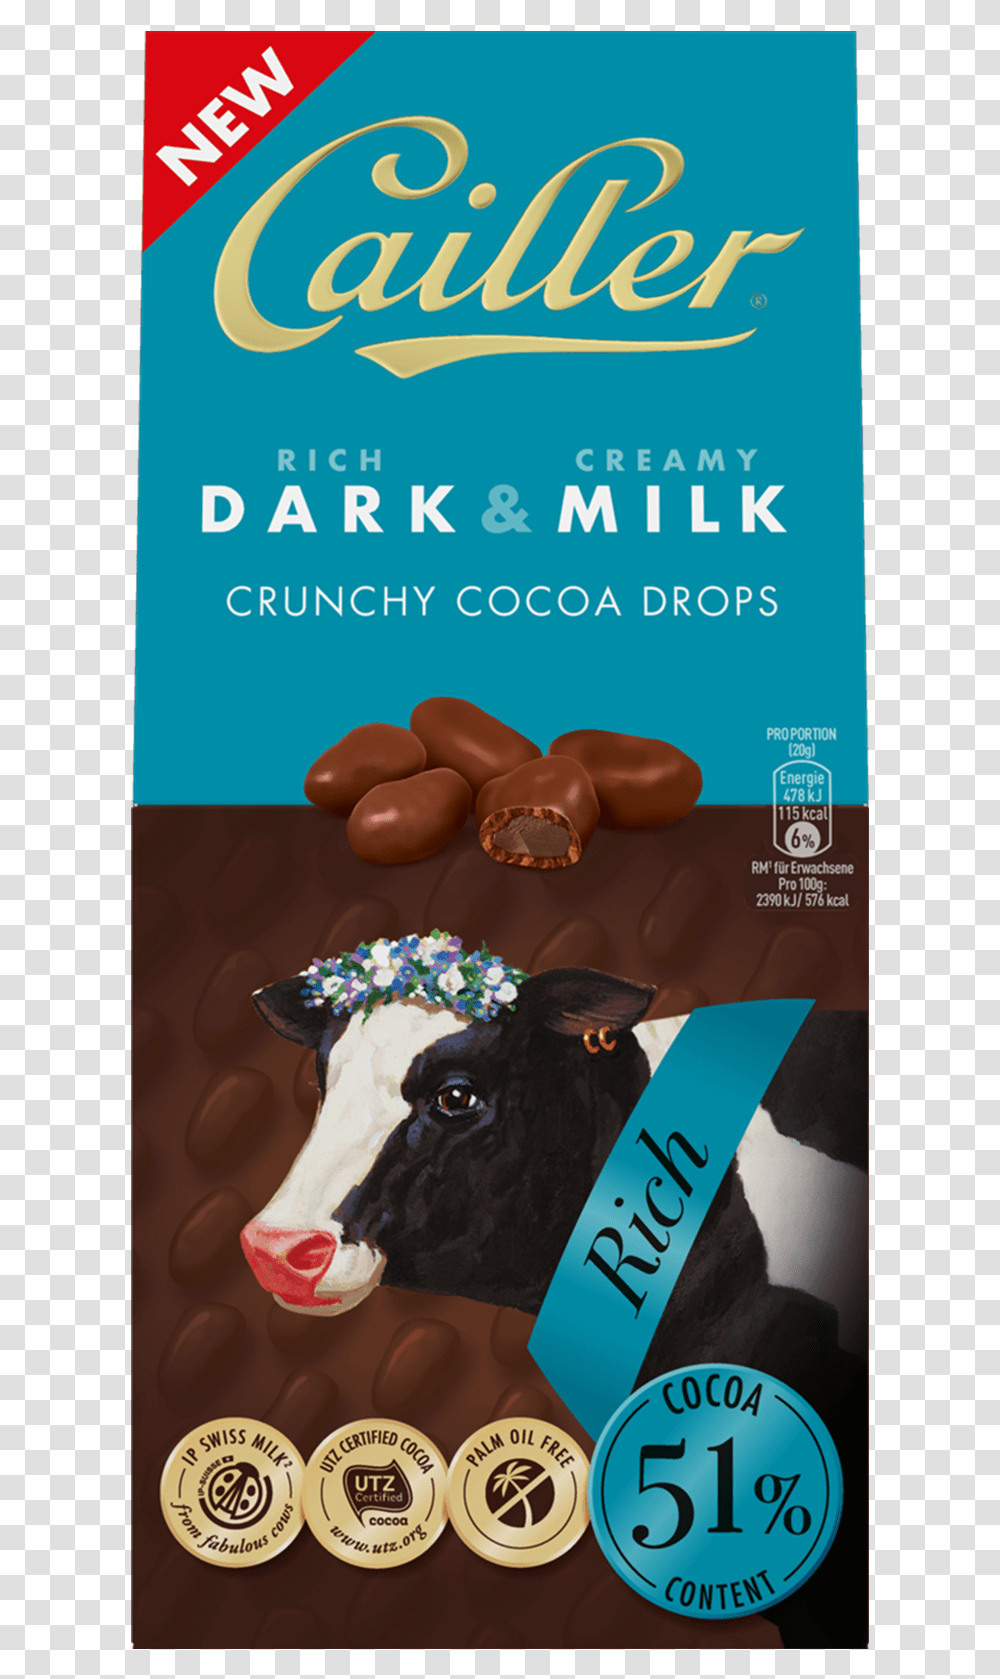 Darkampmilk Crunchy Cocoa Drops 51 Rich Cacao 80g Cailler Crunchy Cocoa Drops, Cow, Cattle, Mammal, Animal Transparent Png